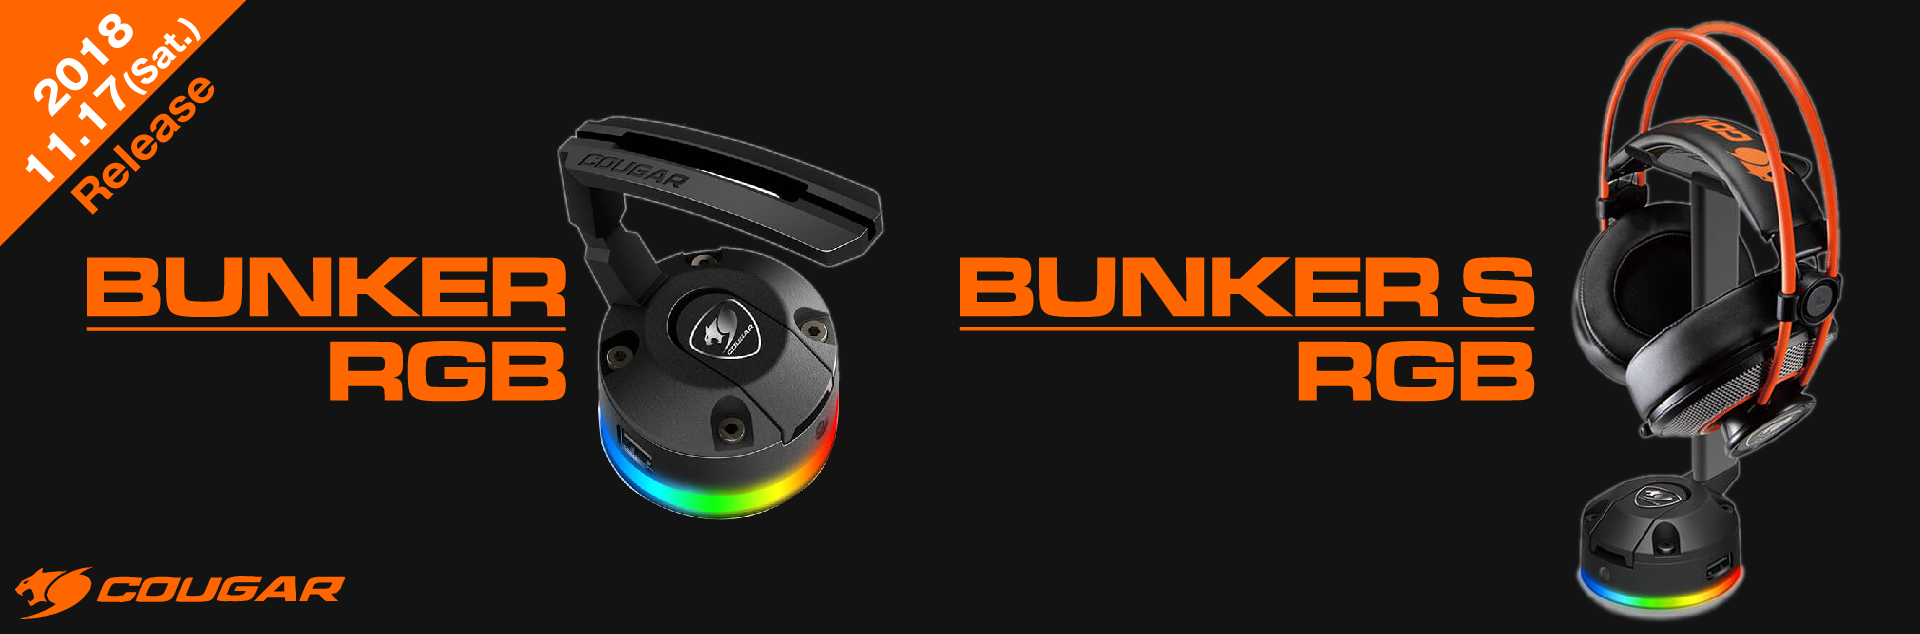 COUGAR、RGB LEDライティングを搭載したマウスバンジー「BUNKER RGB」、ヘッドセットスタンド「BUNKER S RGB」の国内取り扱いを開始